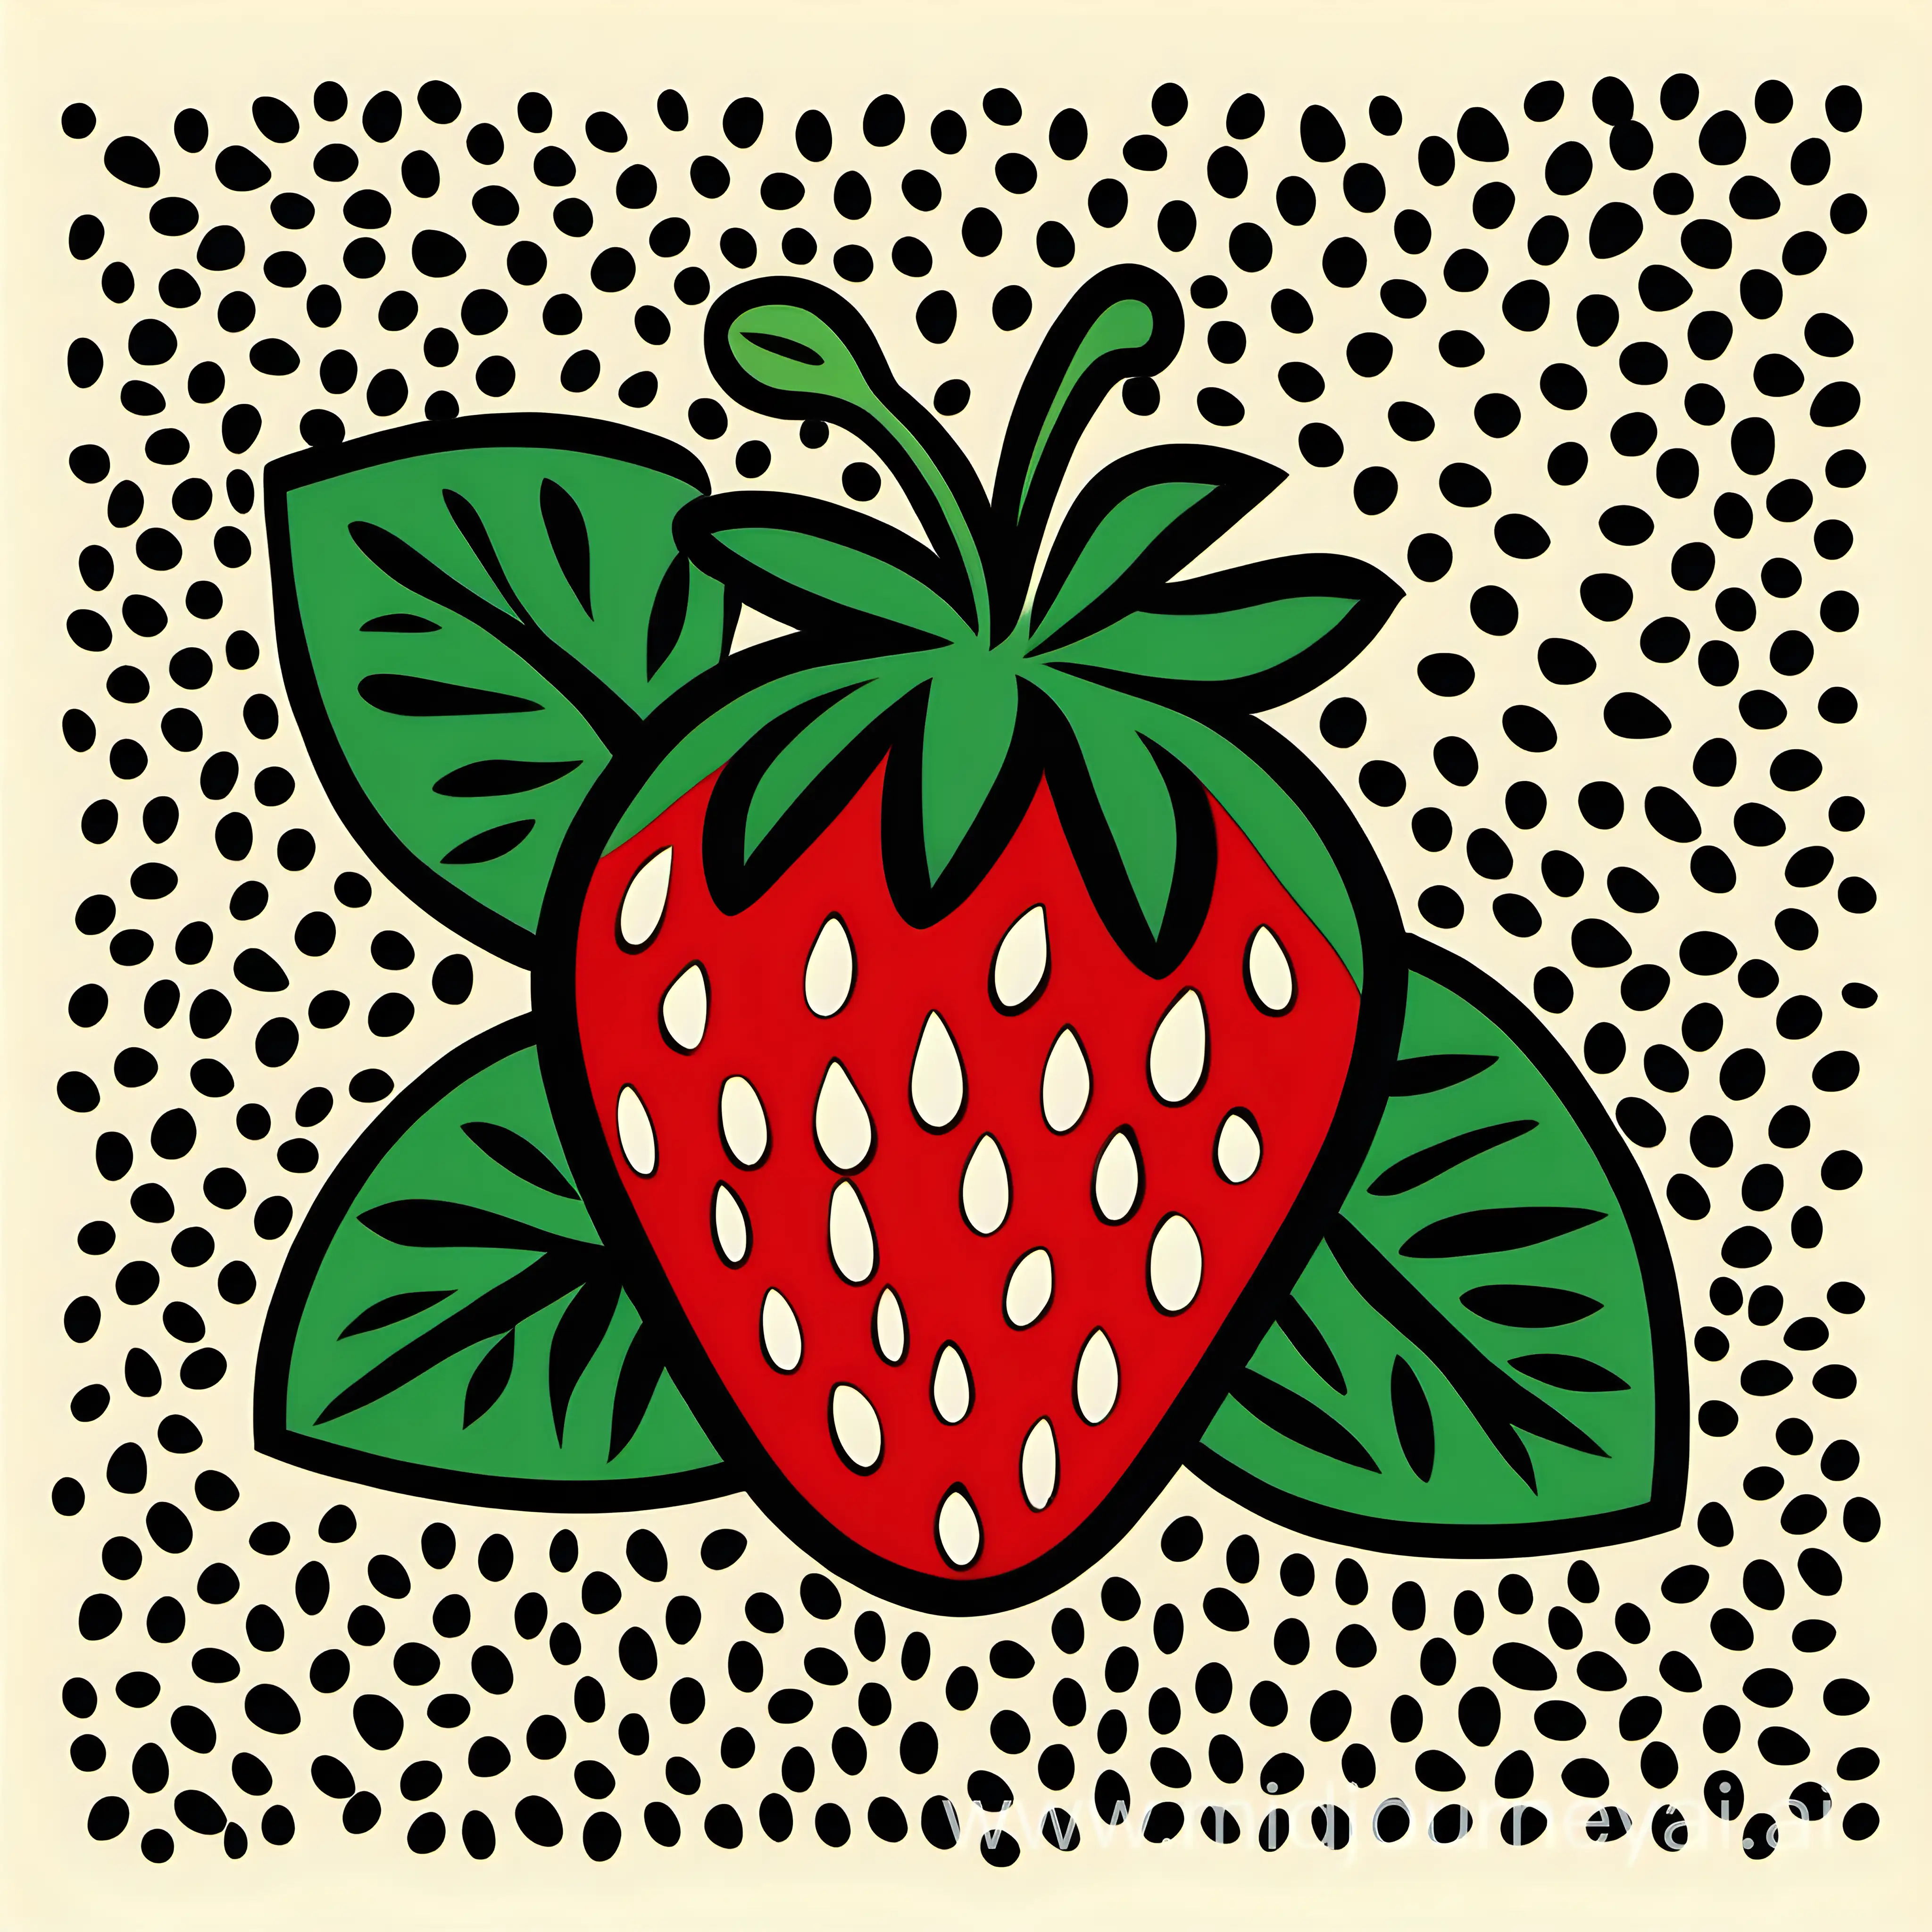 Vibrant Strawberry Illustration in Henri Matisse Style NeoImpressionist Art